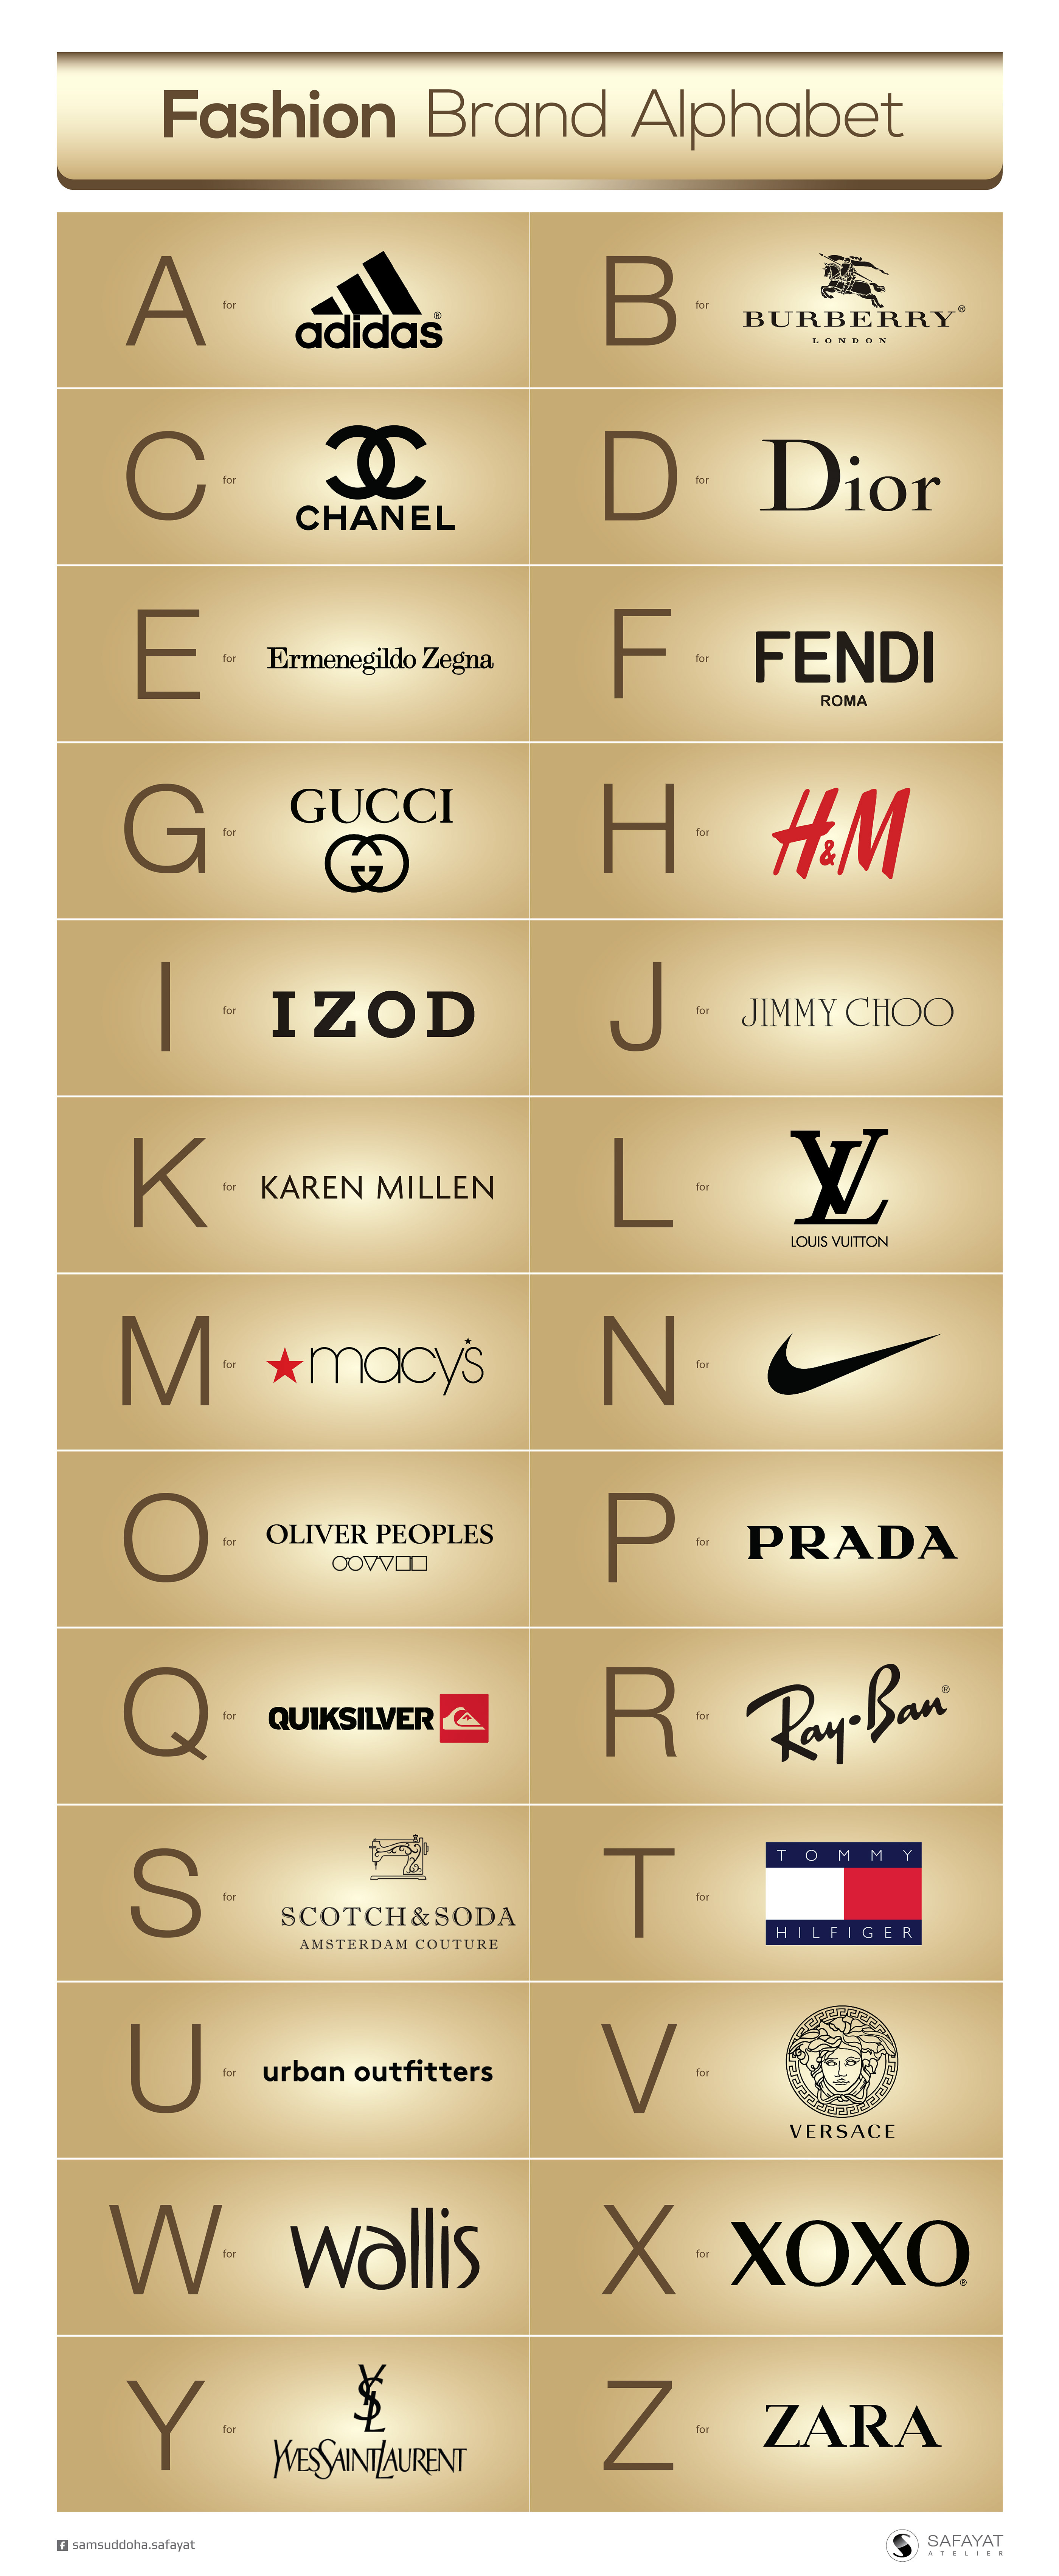 Fashion Brand Alphabet on Behance